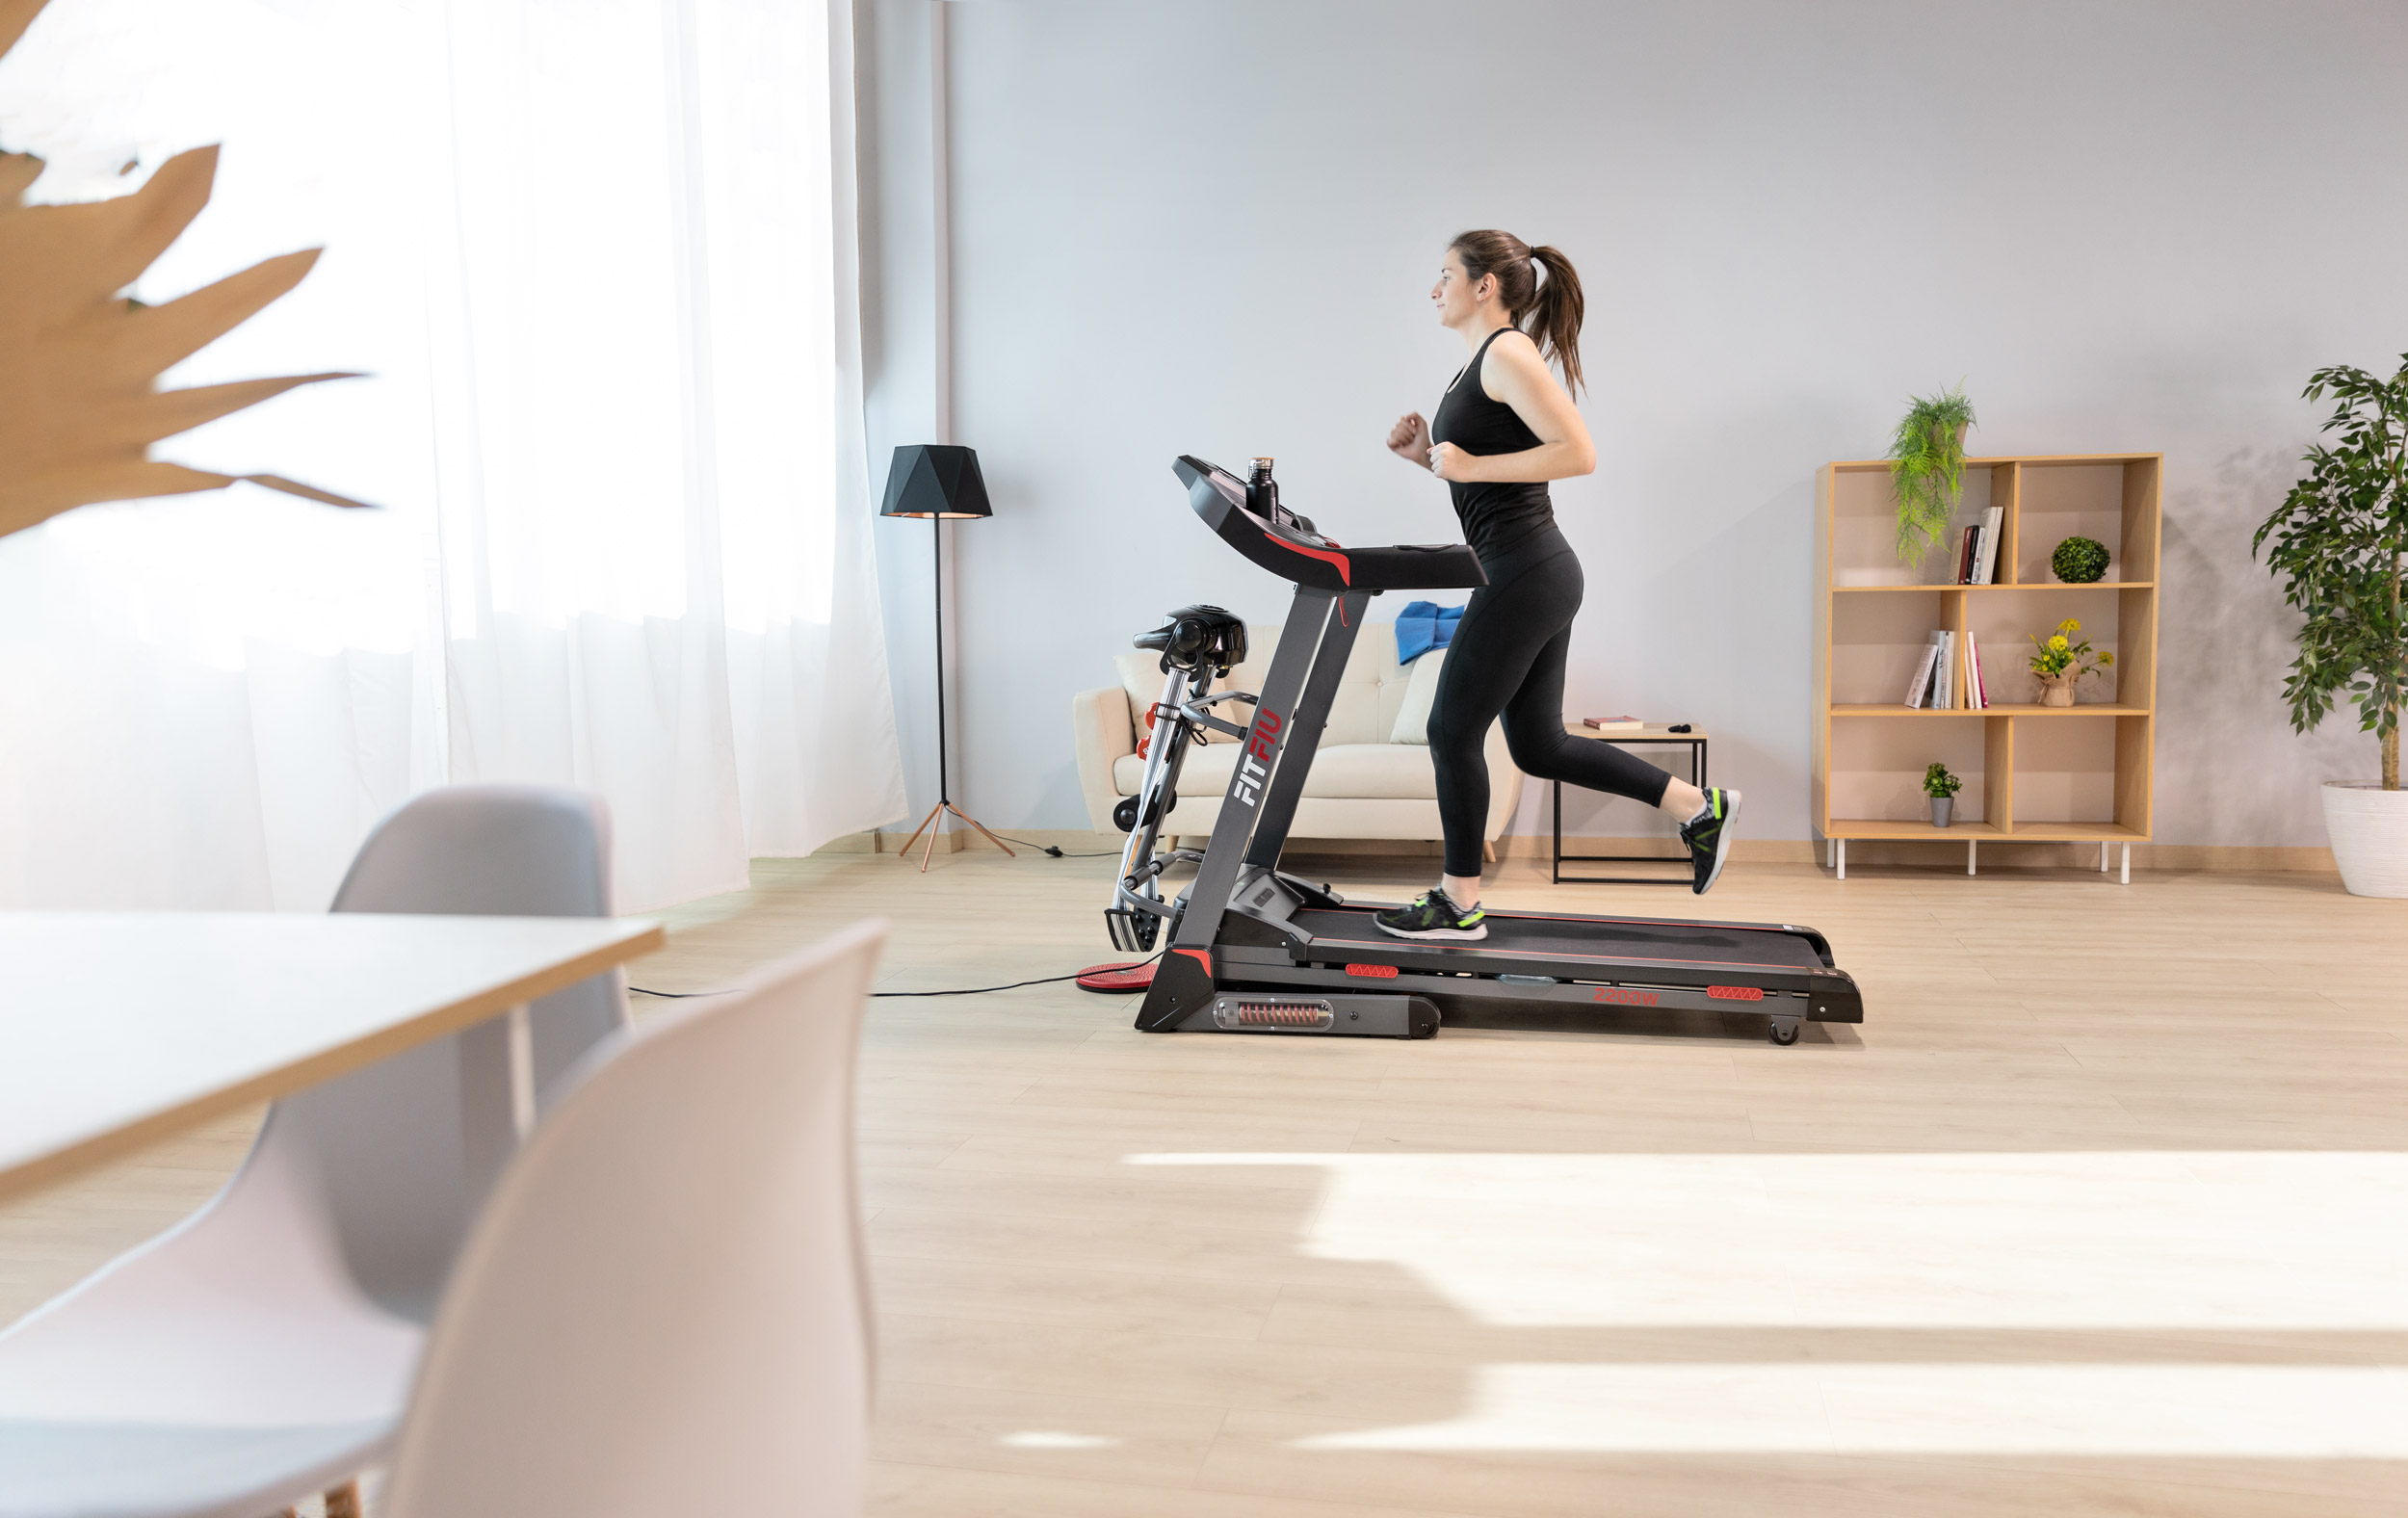 Beneficios de entrenar con bicicleta elíptica para tu salud - FITFIU Fitness